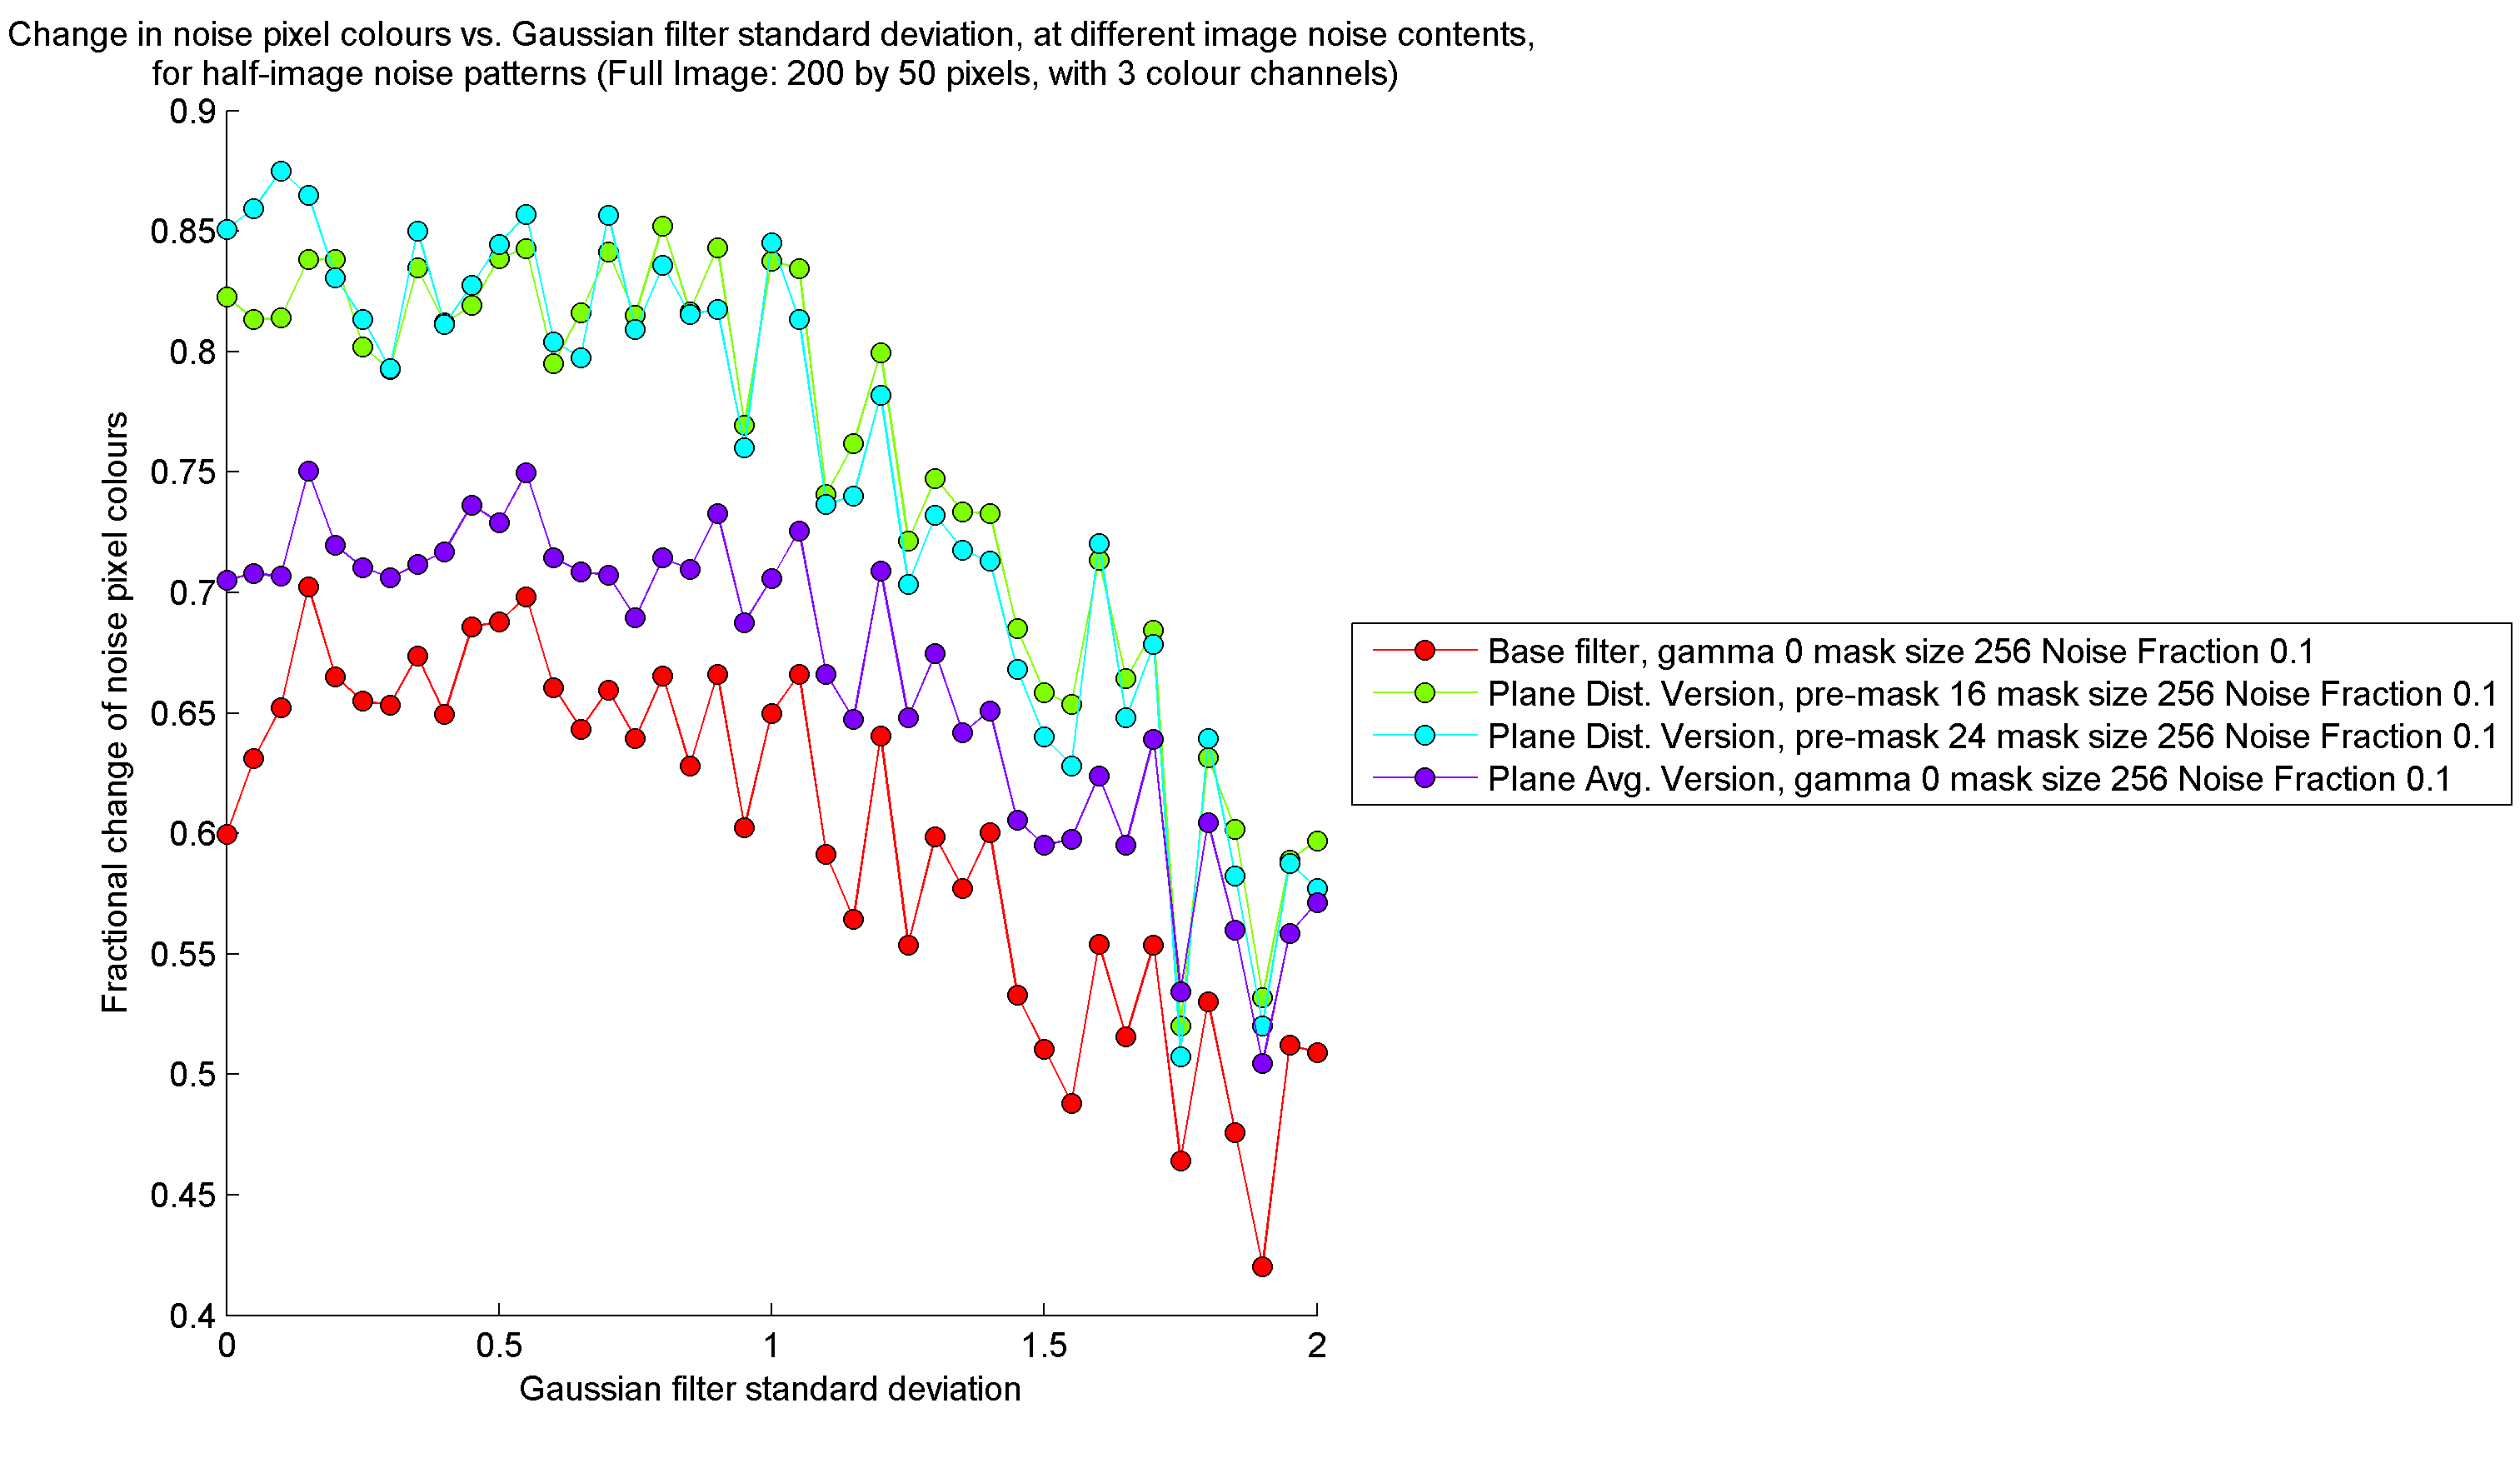 Noise pixel reduction vs. Gaussian filter standard deviation